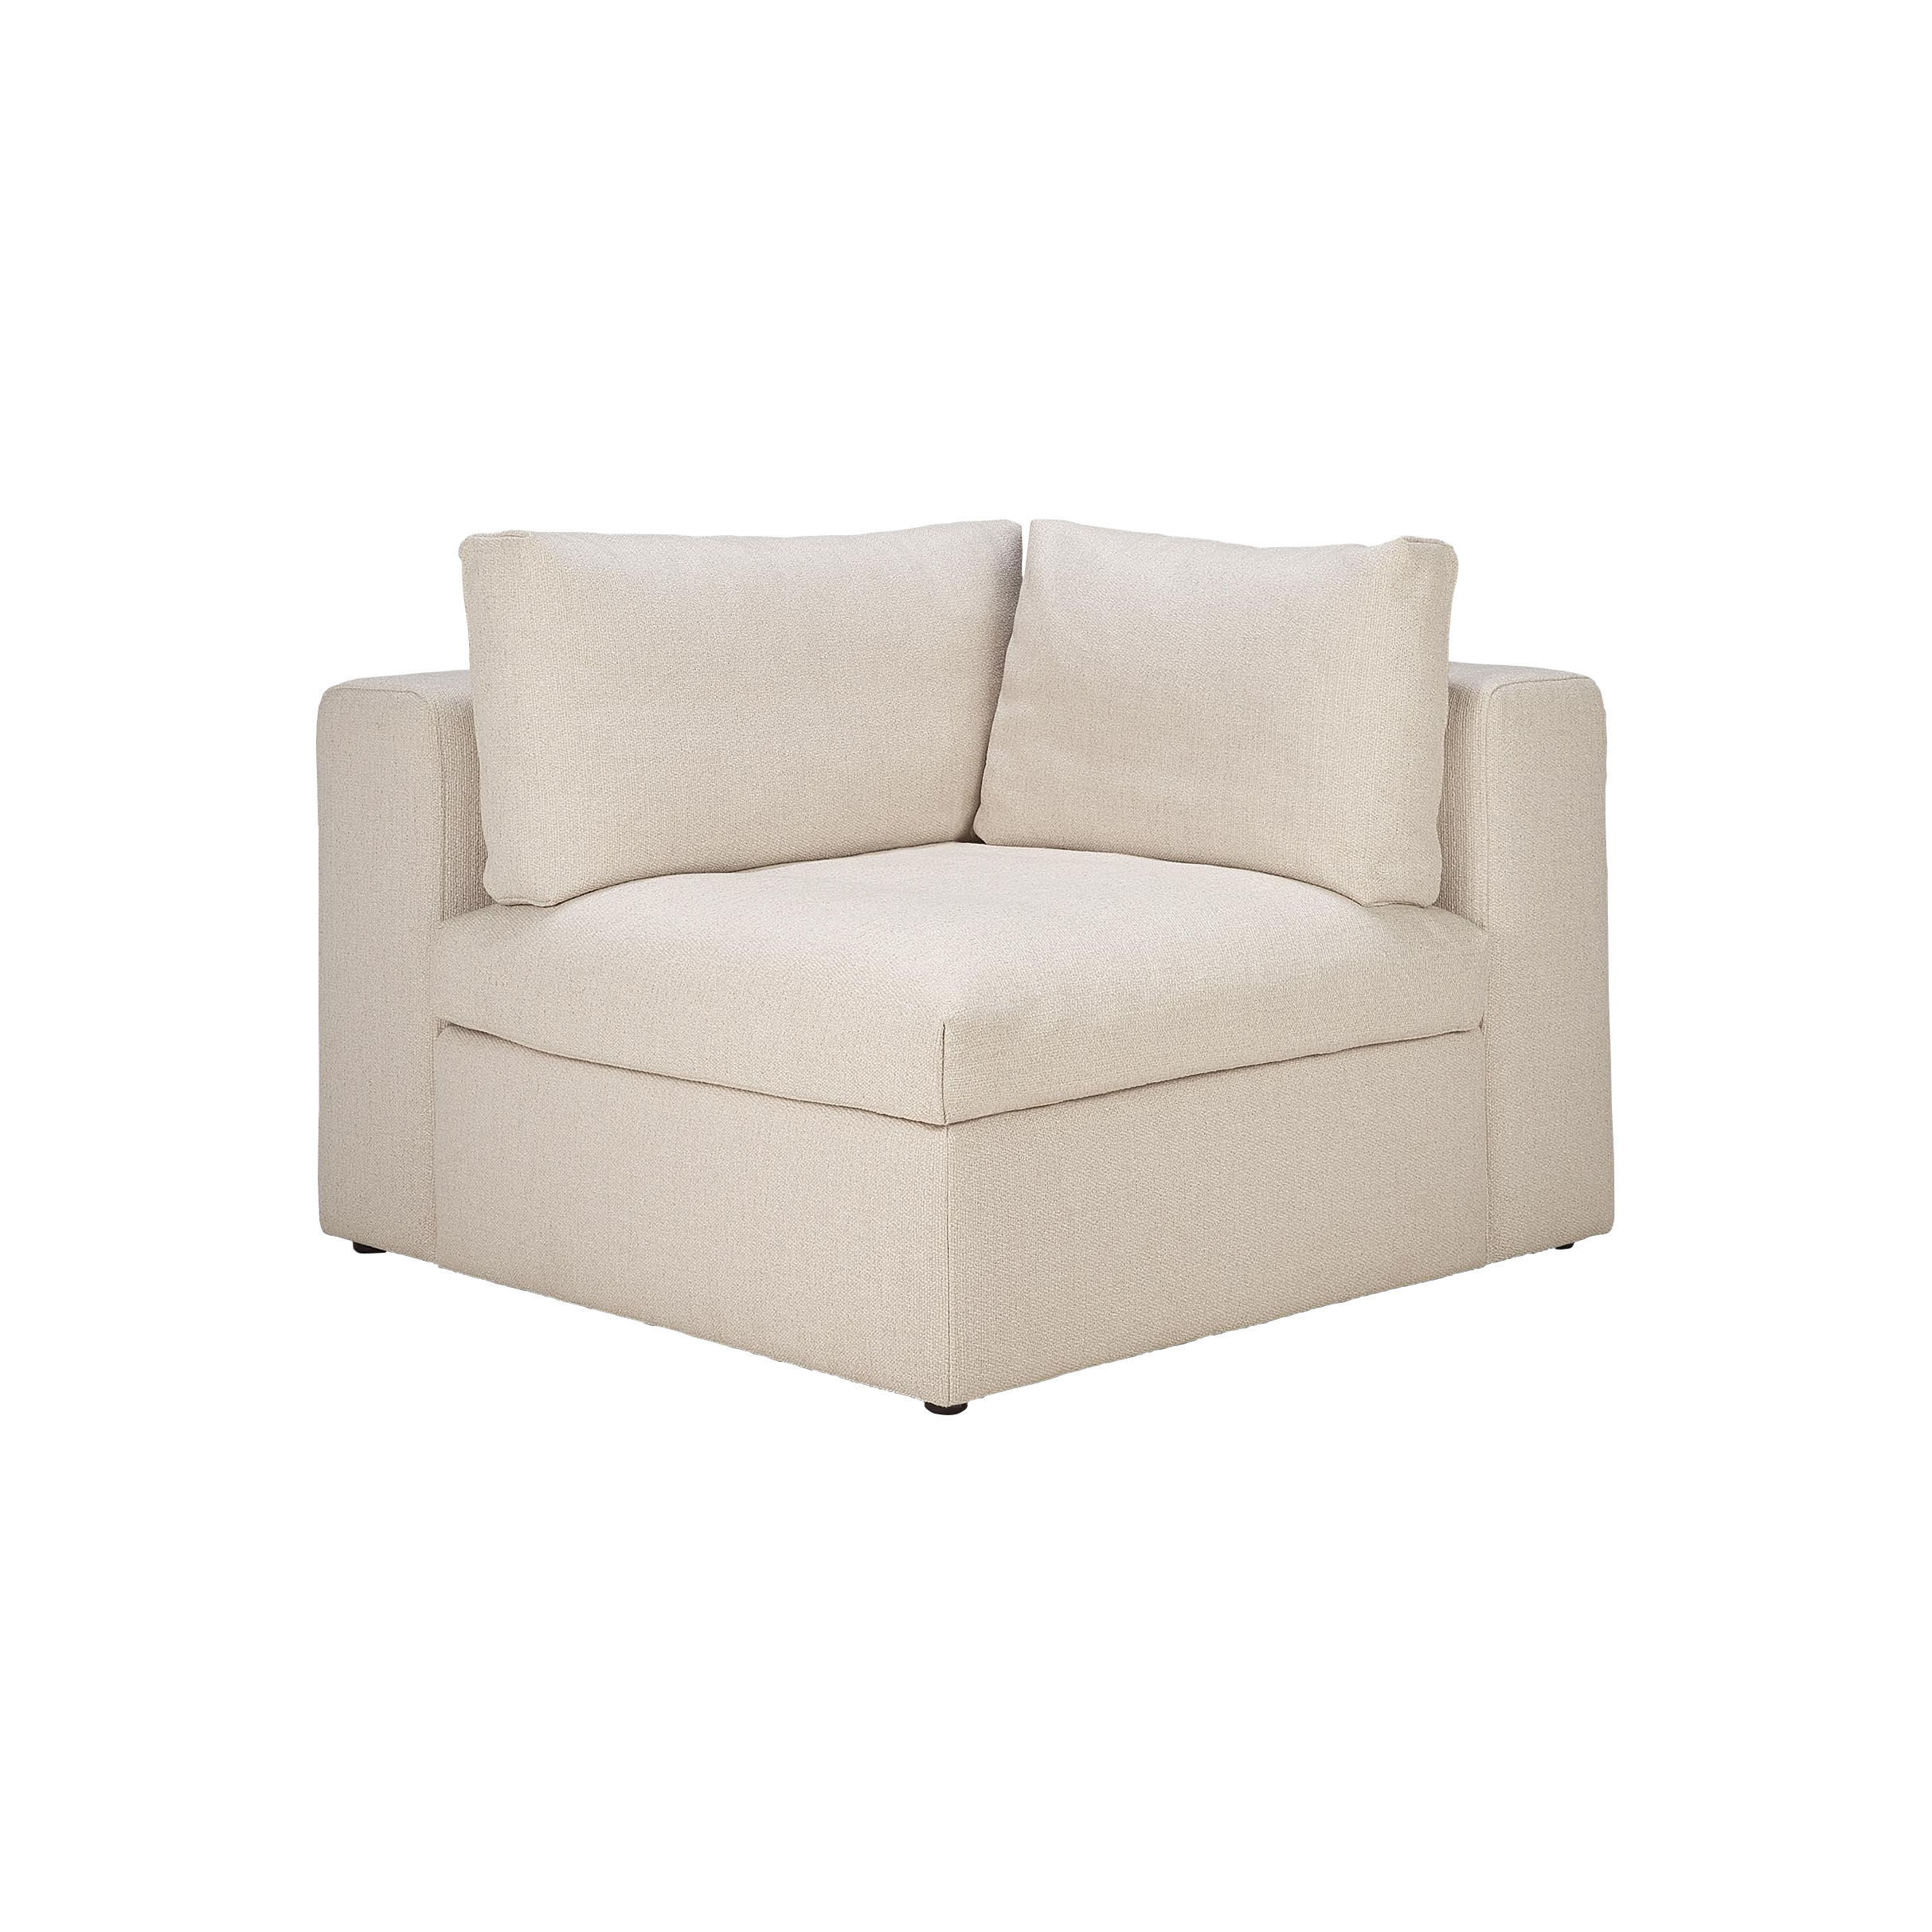 Ethnicraft Mellow Modular sofa - off white | Made In Design UK